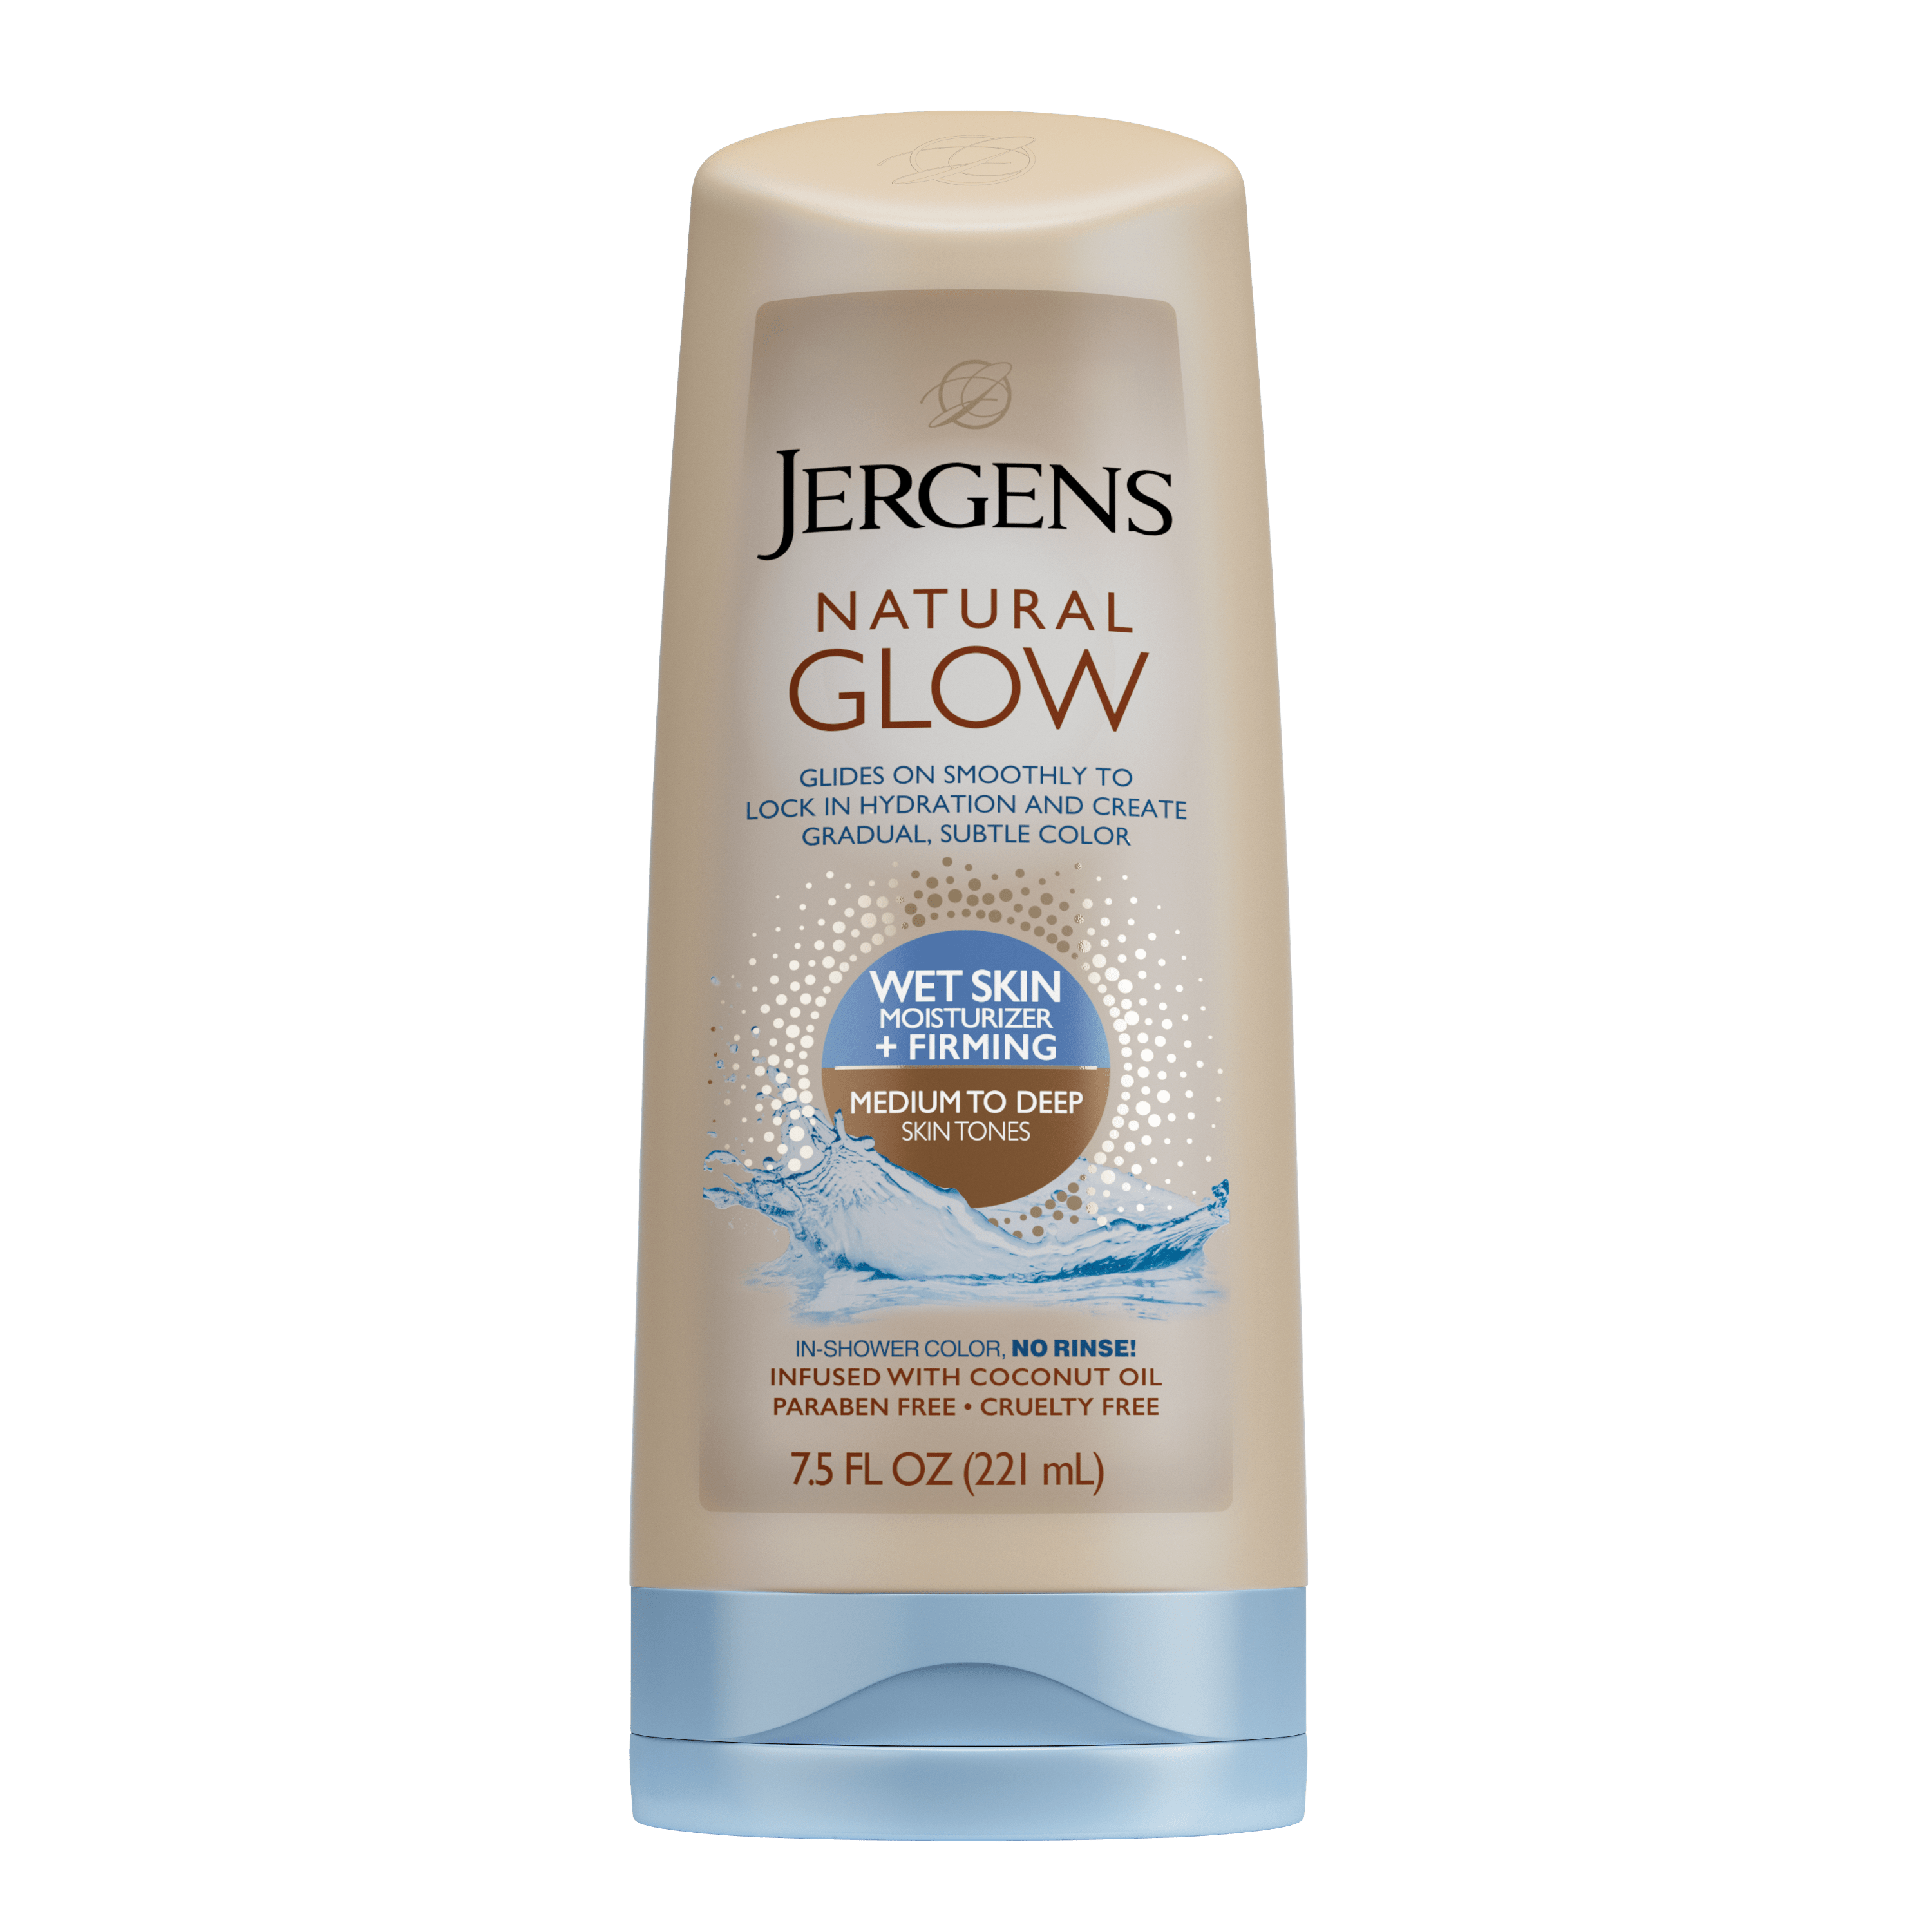 Glow Wet Skin Moisturizer + Firming, Medium to Deep